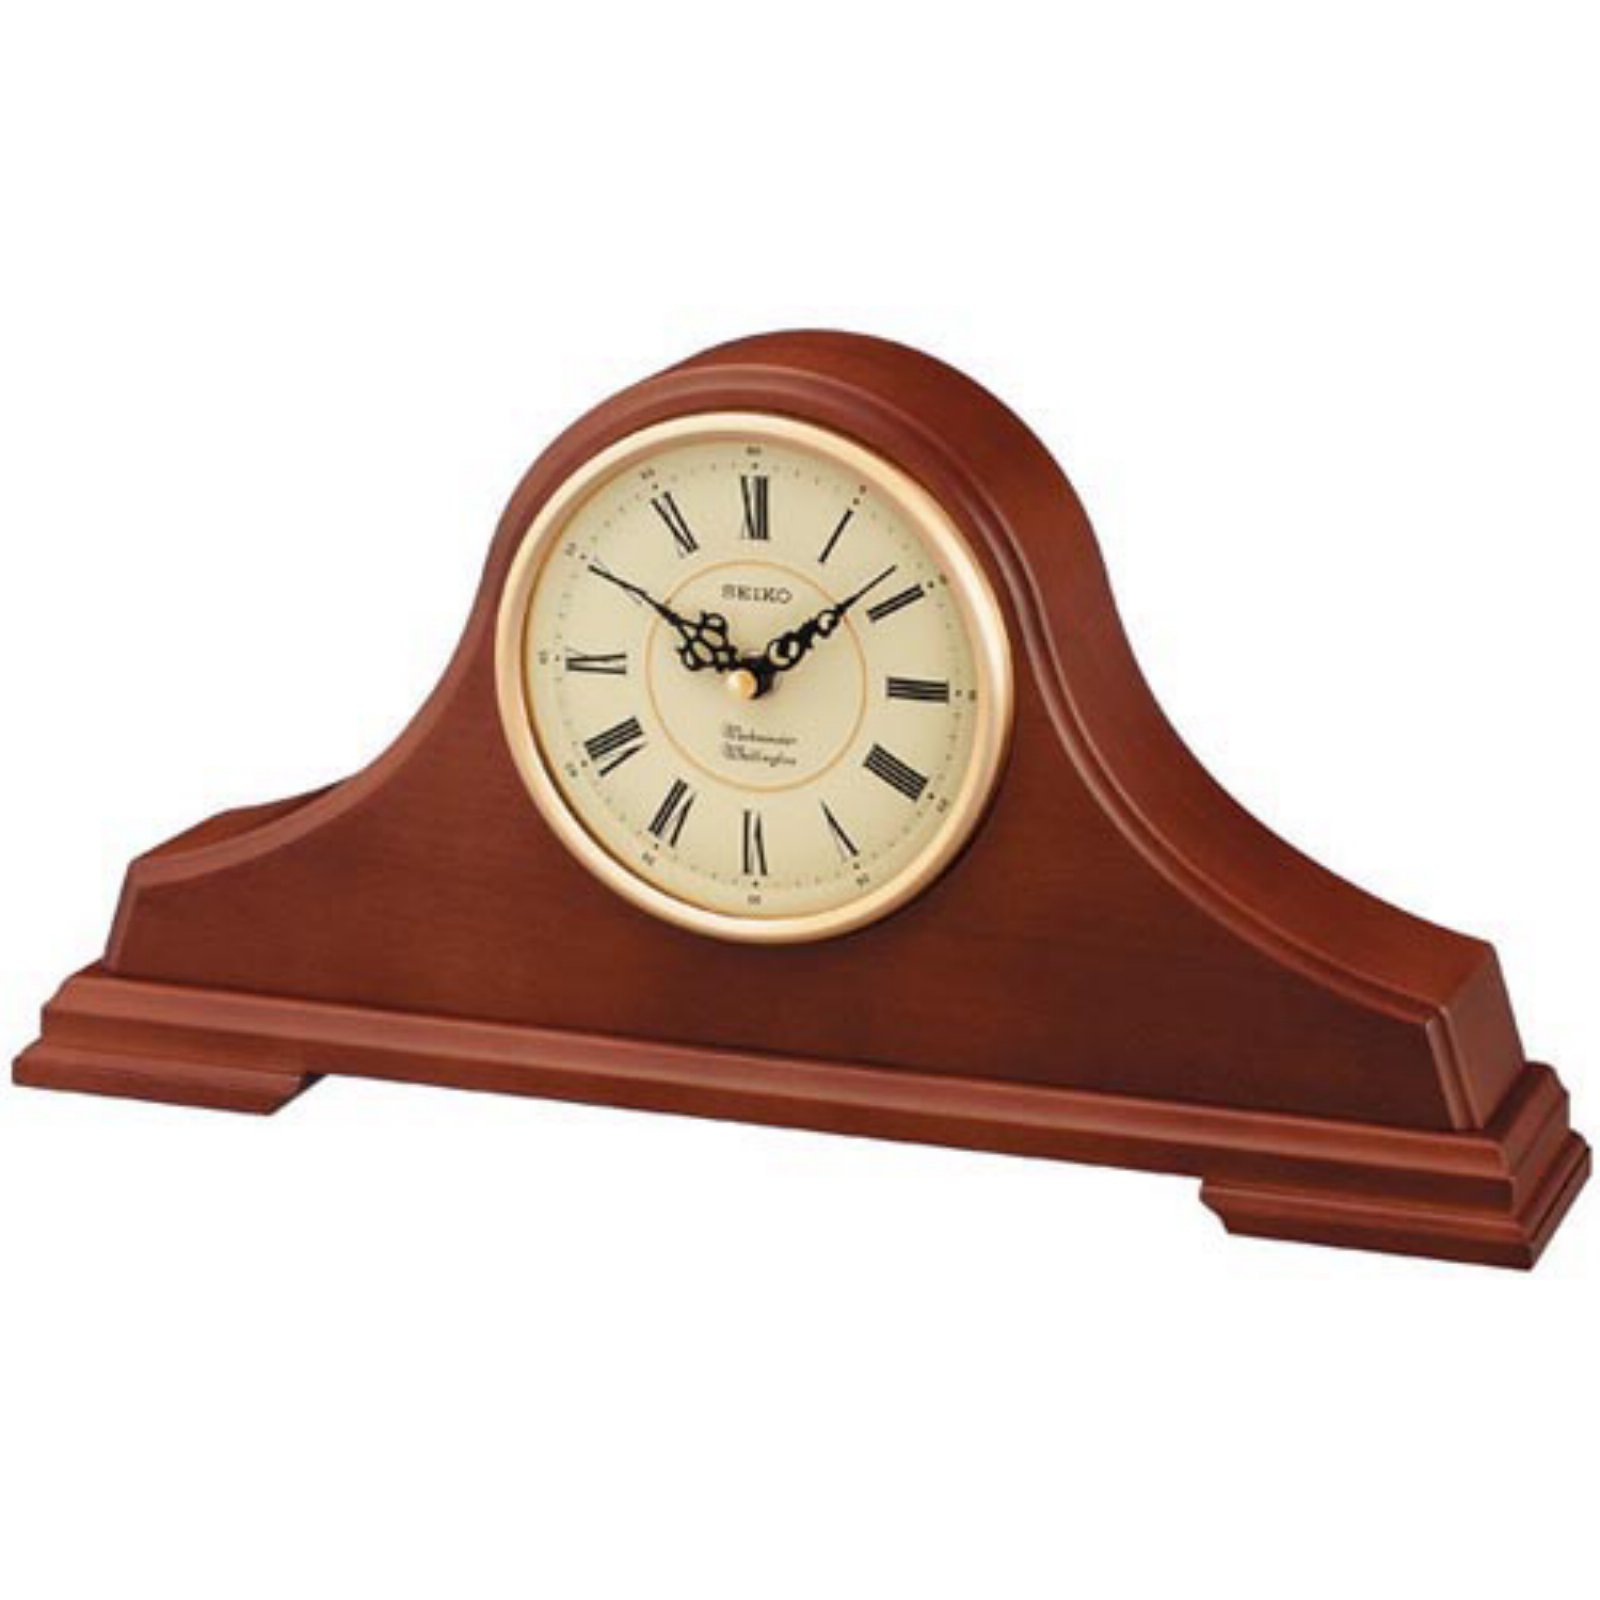 Bulova asheville mantel clock users manual